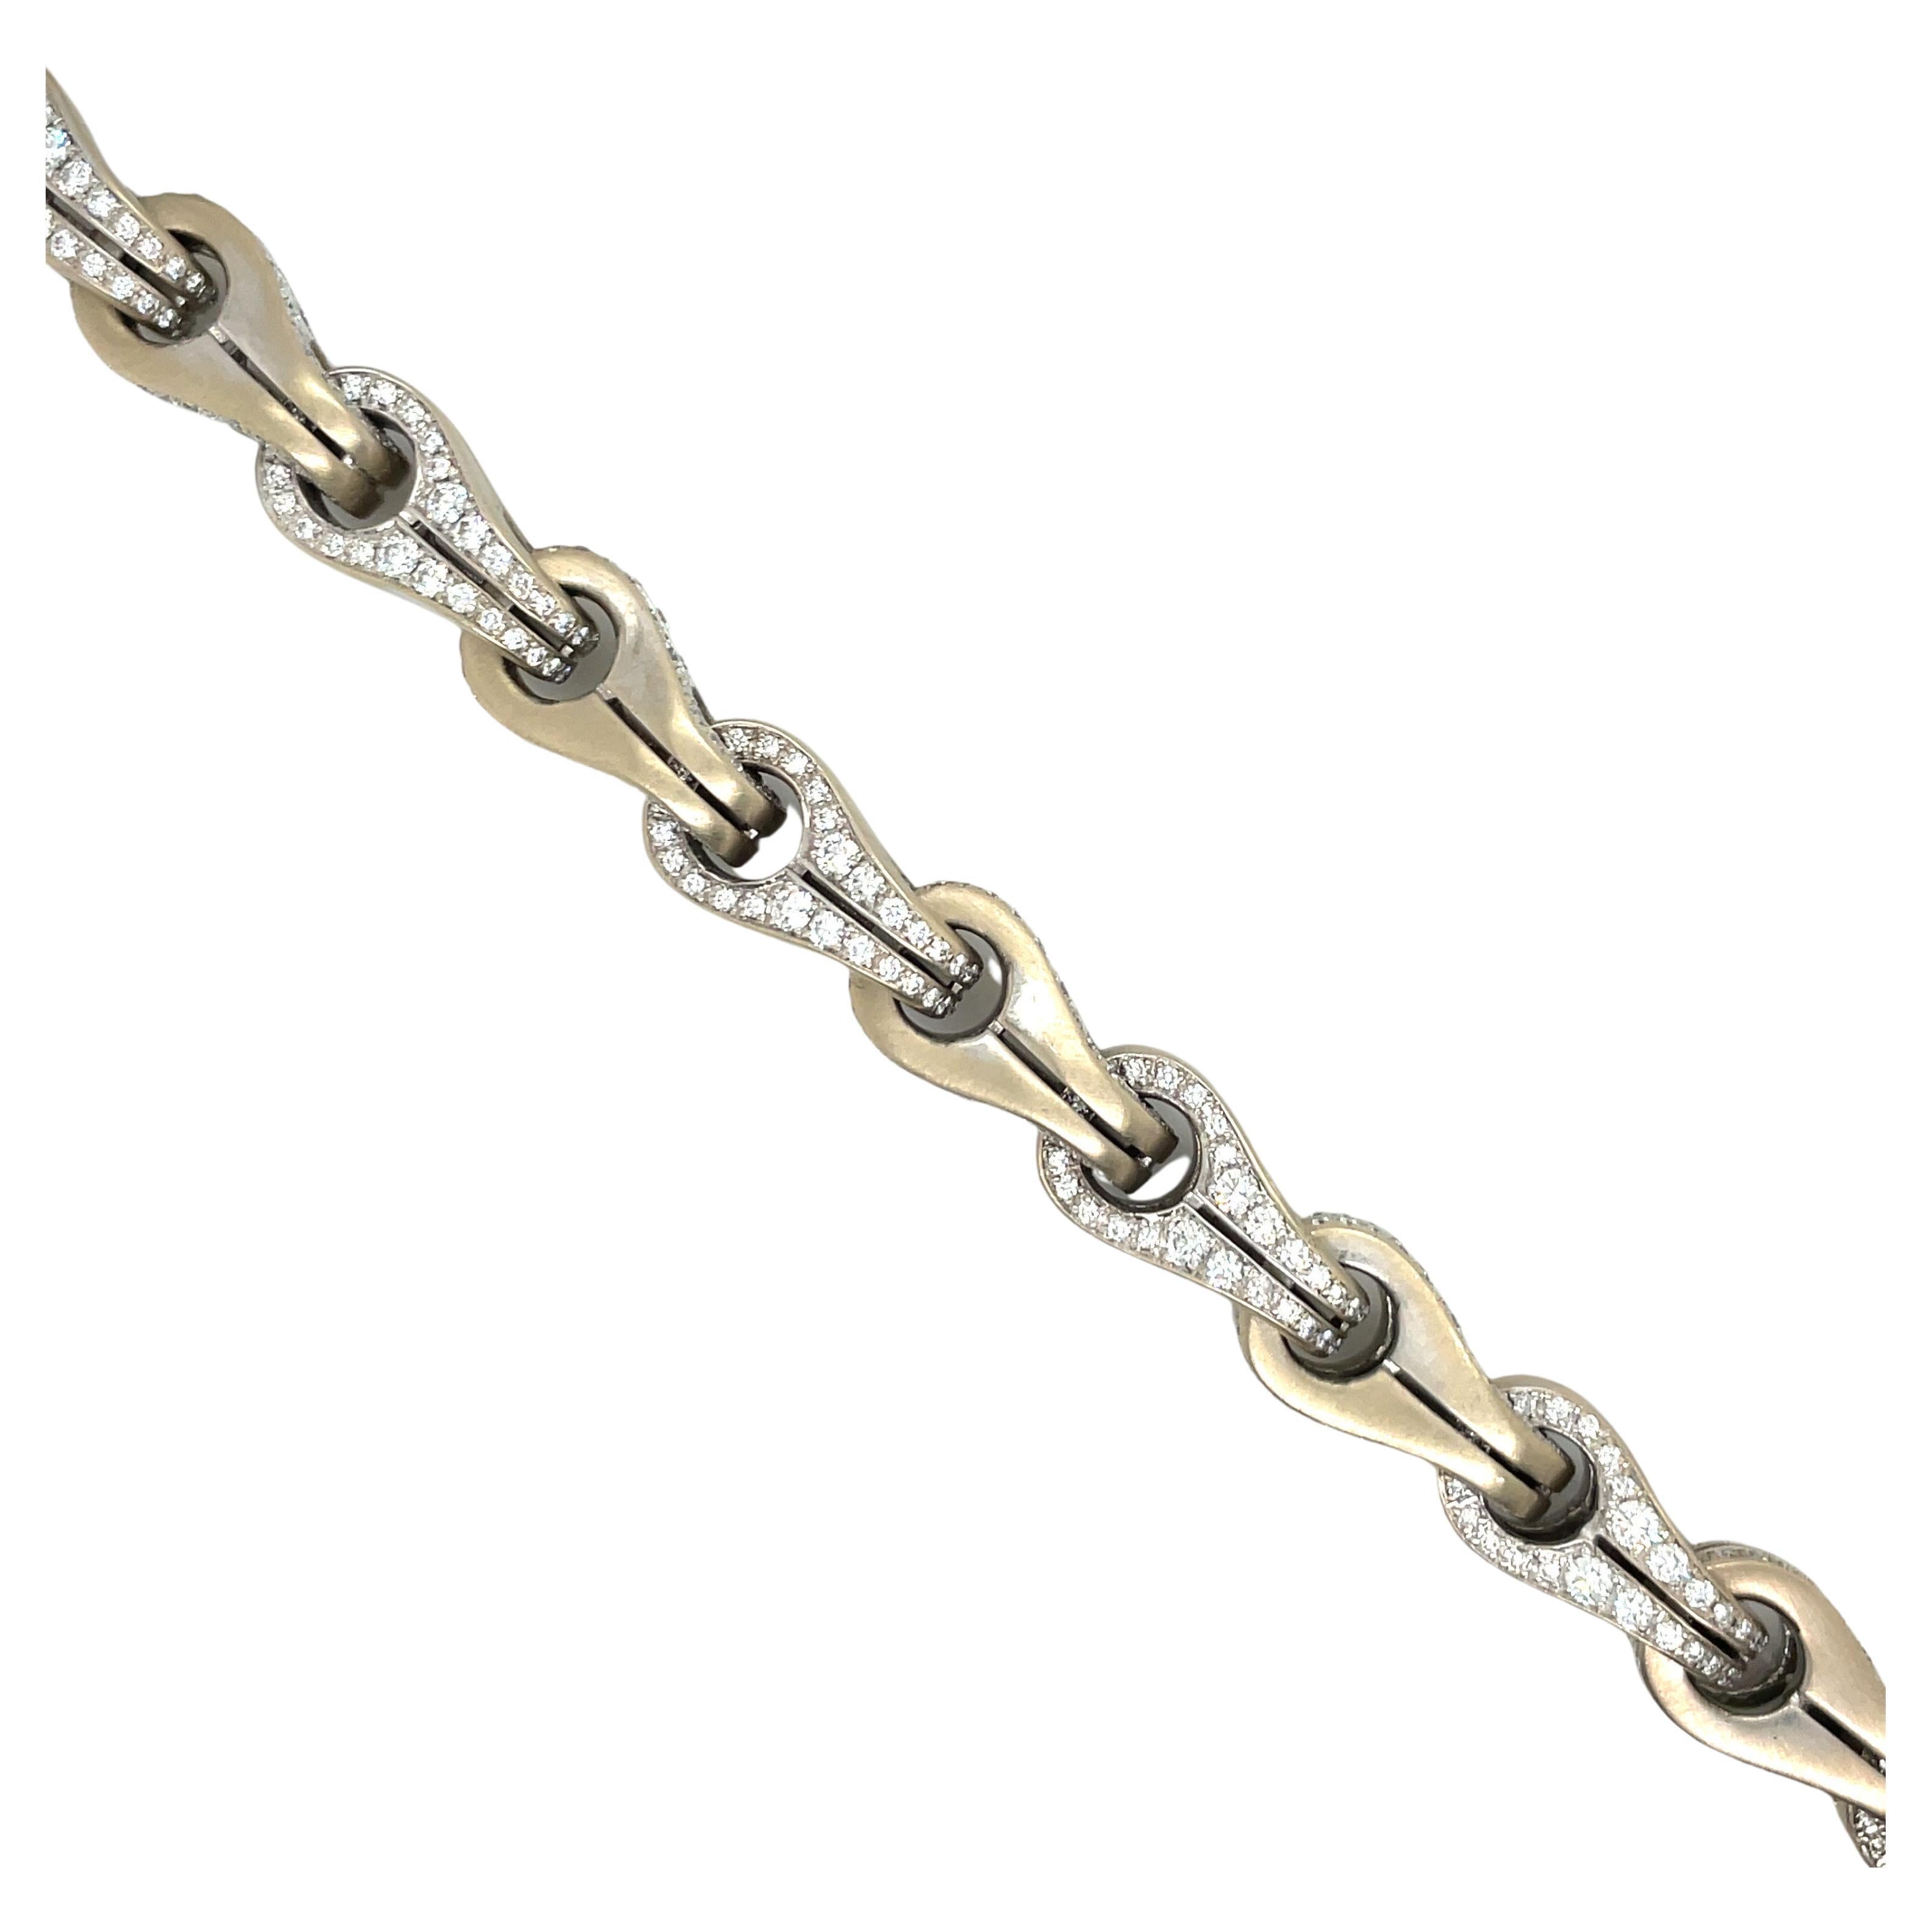 Contemporary Di Modolo Fiamma Collection 18 Karat White Gold Diamond Link Bracelet 13 Carats For Sale